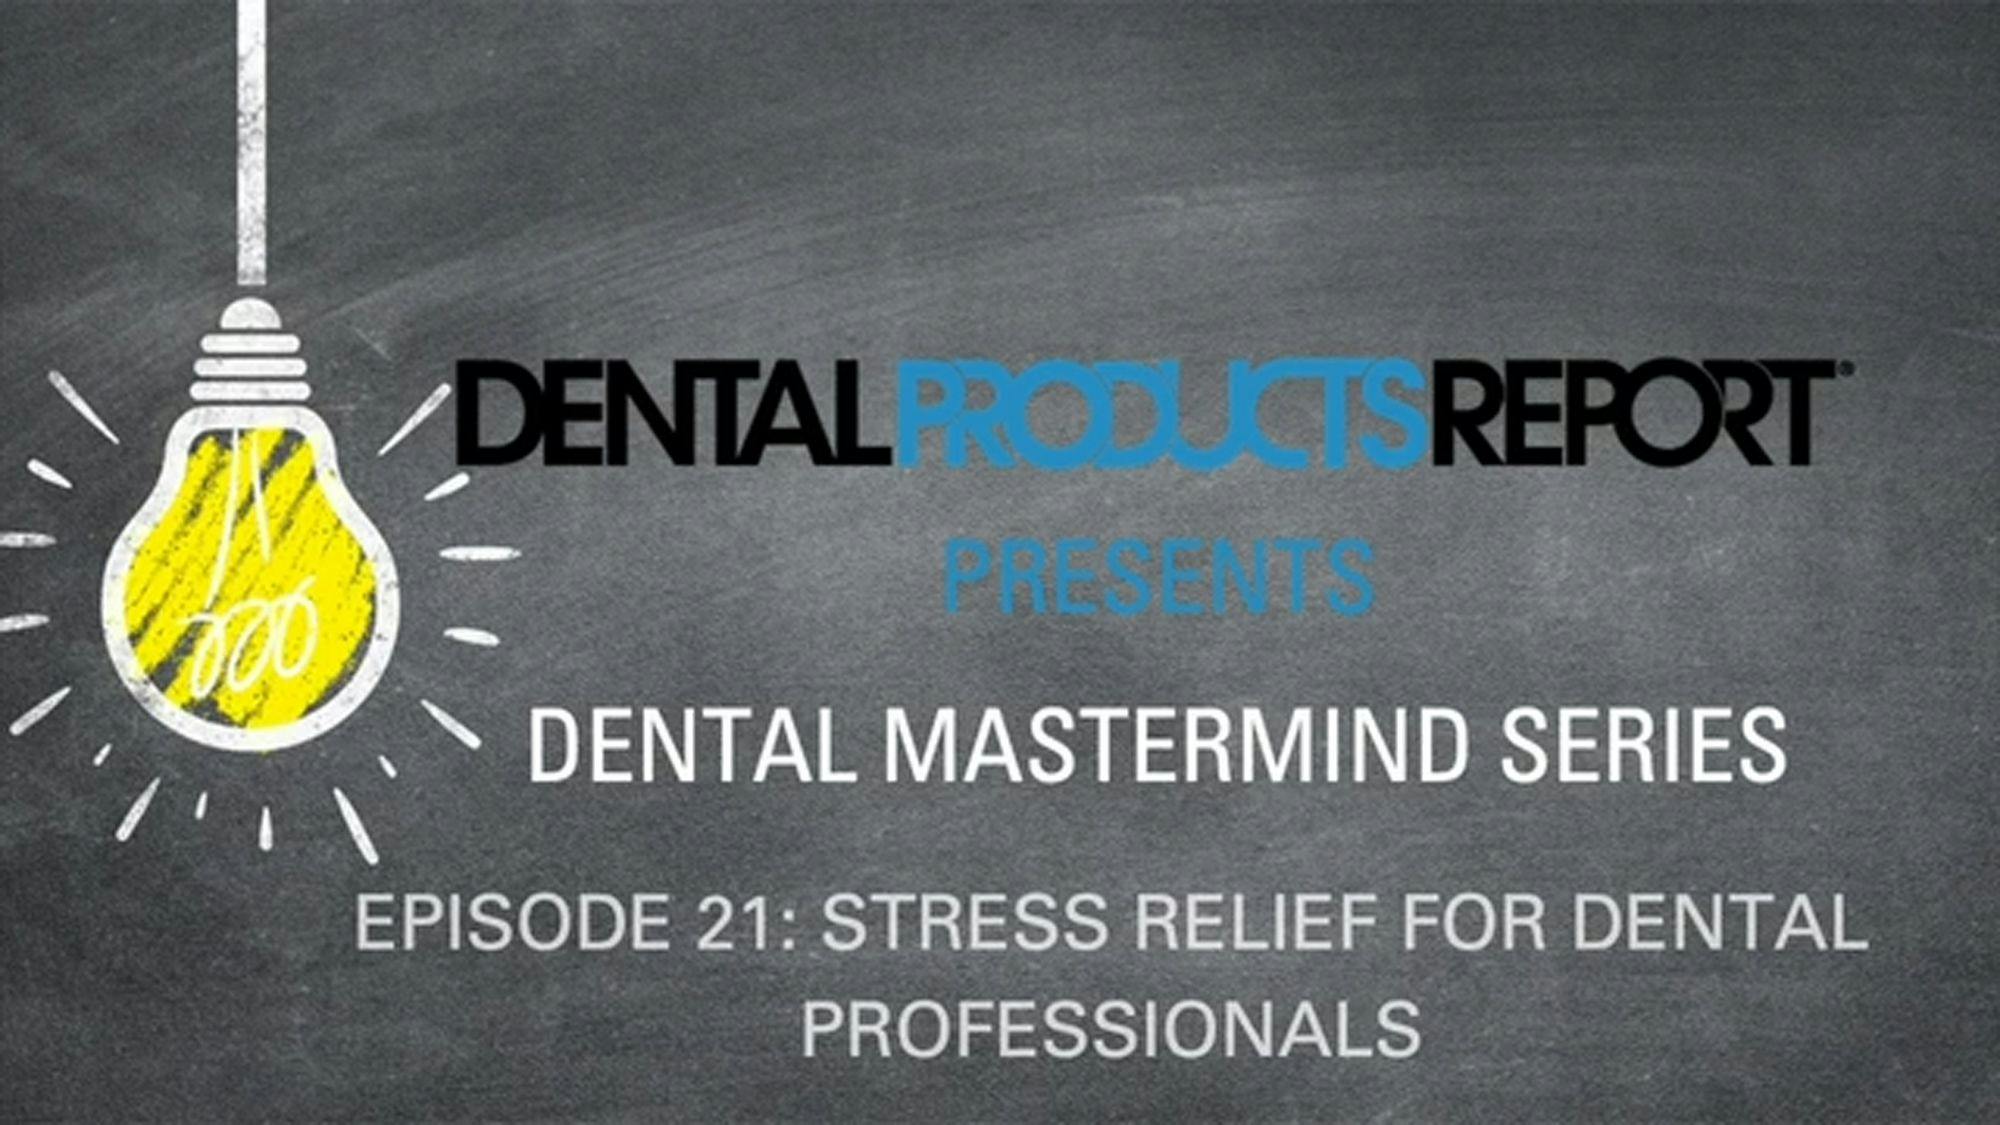 Mastermind - Episode 21 - Stress Relief for Dental Professionals